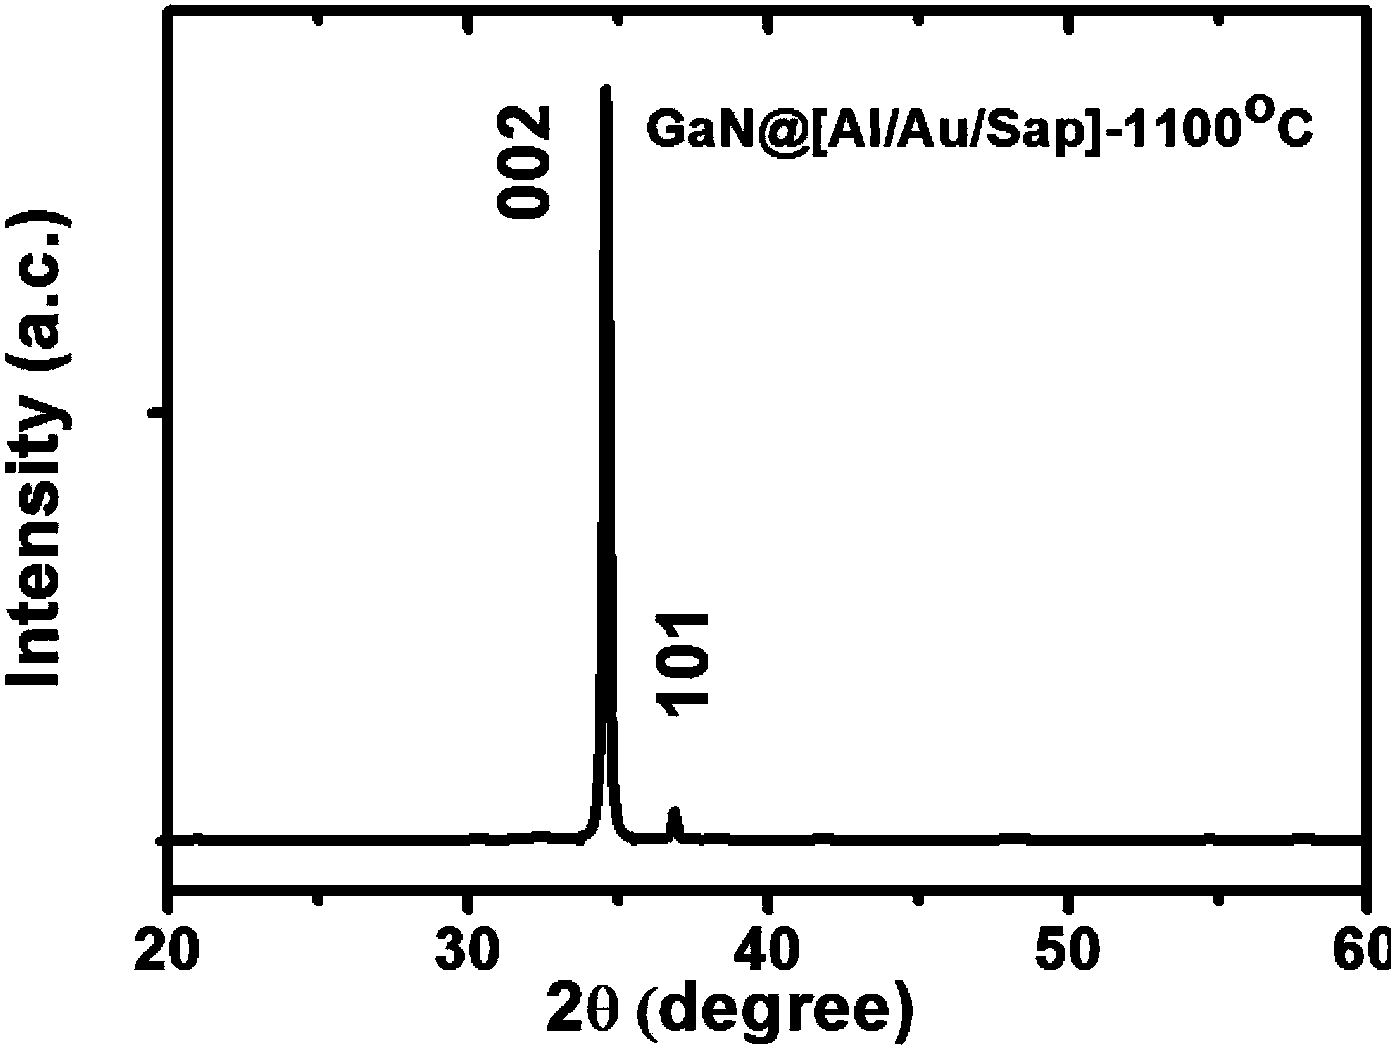 Method for reducing defect density of gallium nitride nanowire array crystal